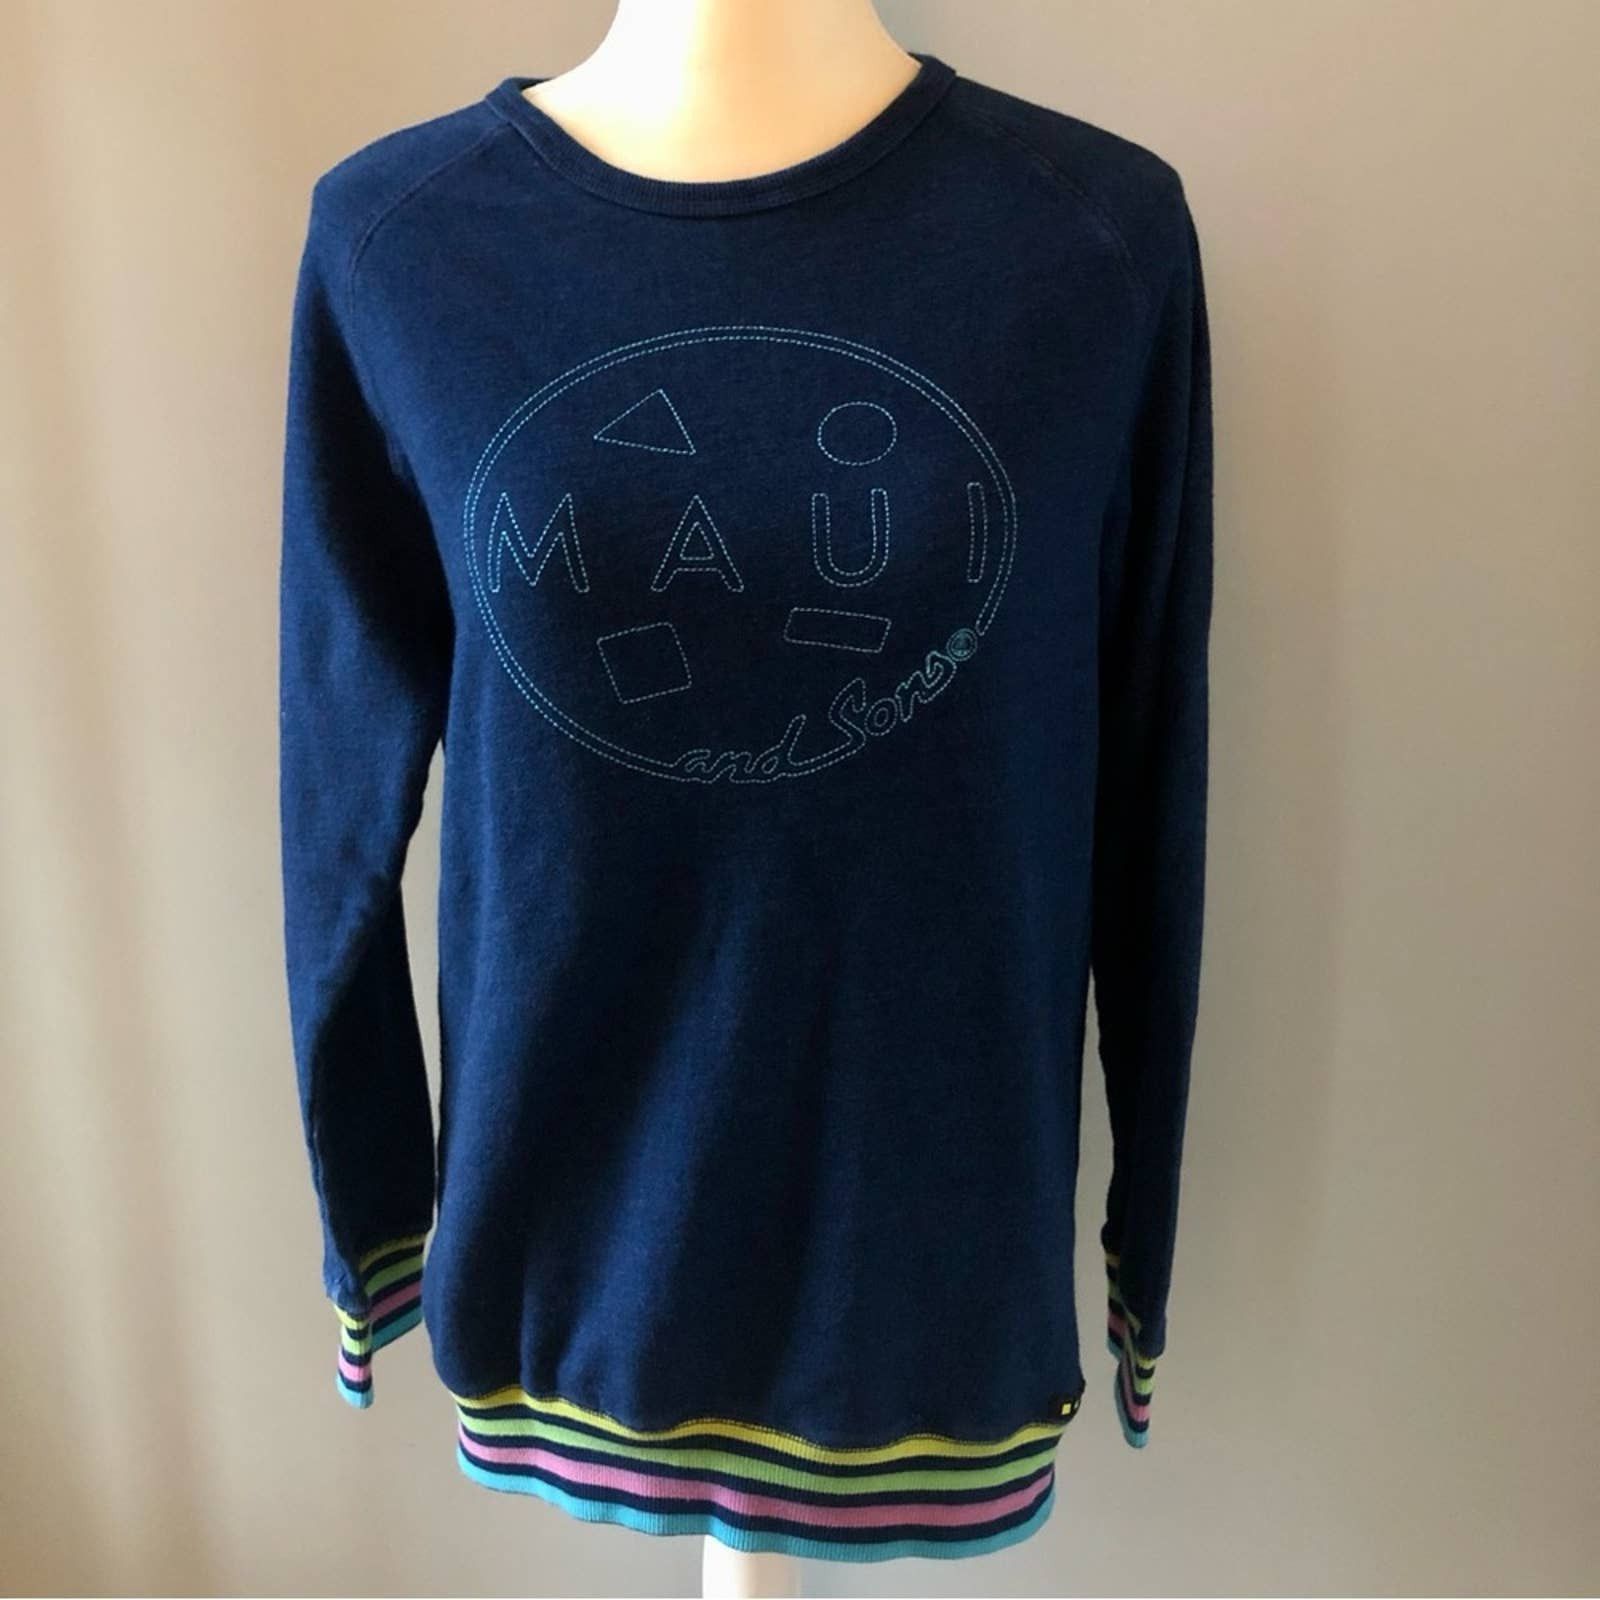 Maui And Sons Maui & Sons Navy Blue Long Sweatshirt Size Medium Size M / US 6-8 / IT 42-44 - 3 Thumbnail